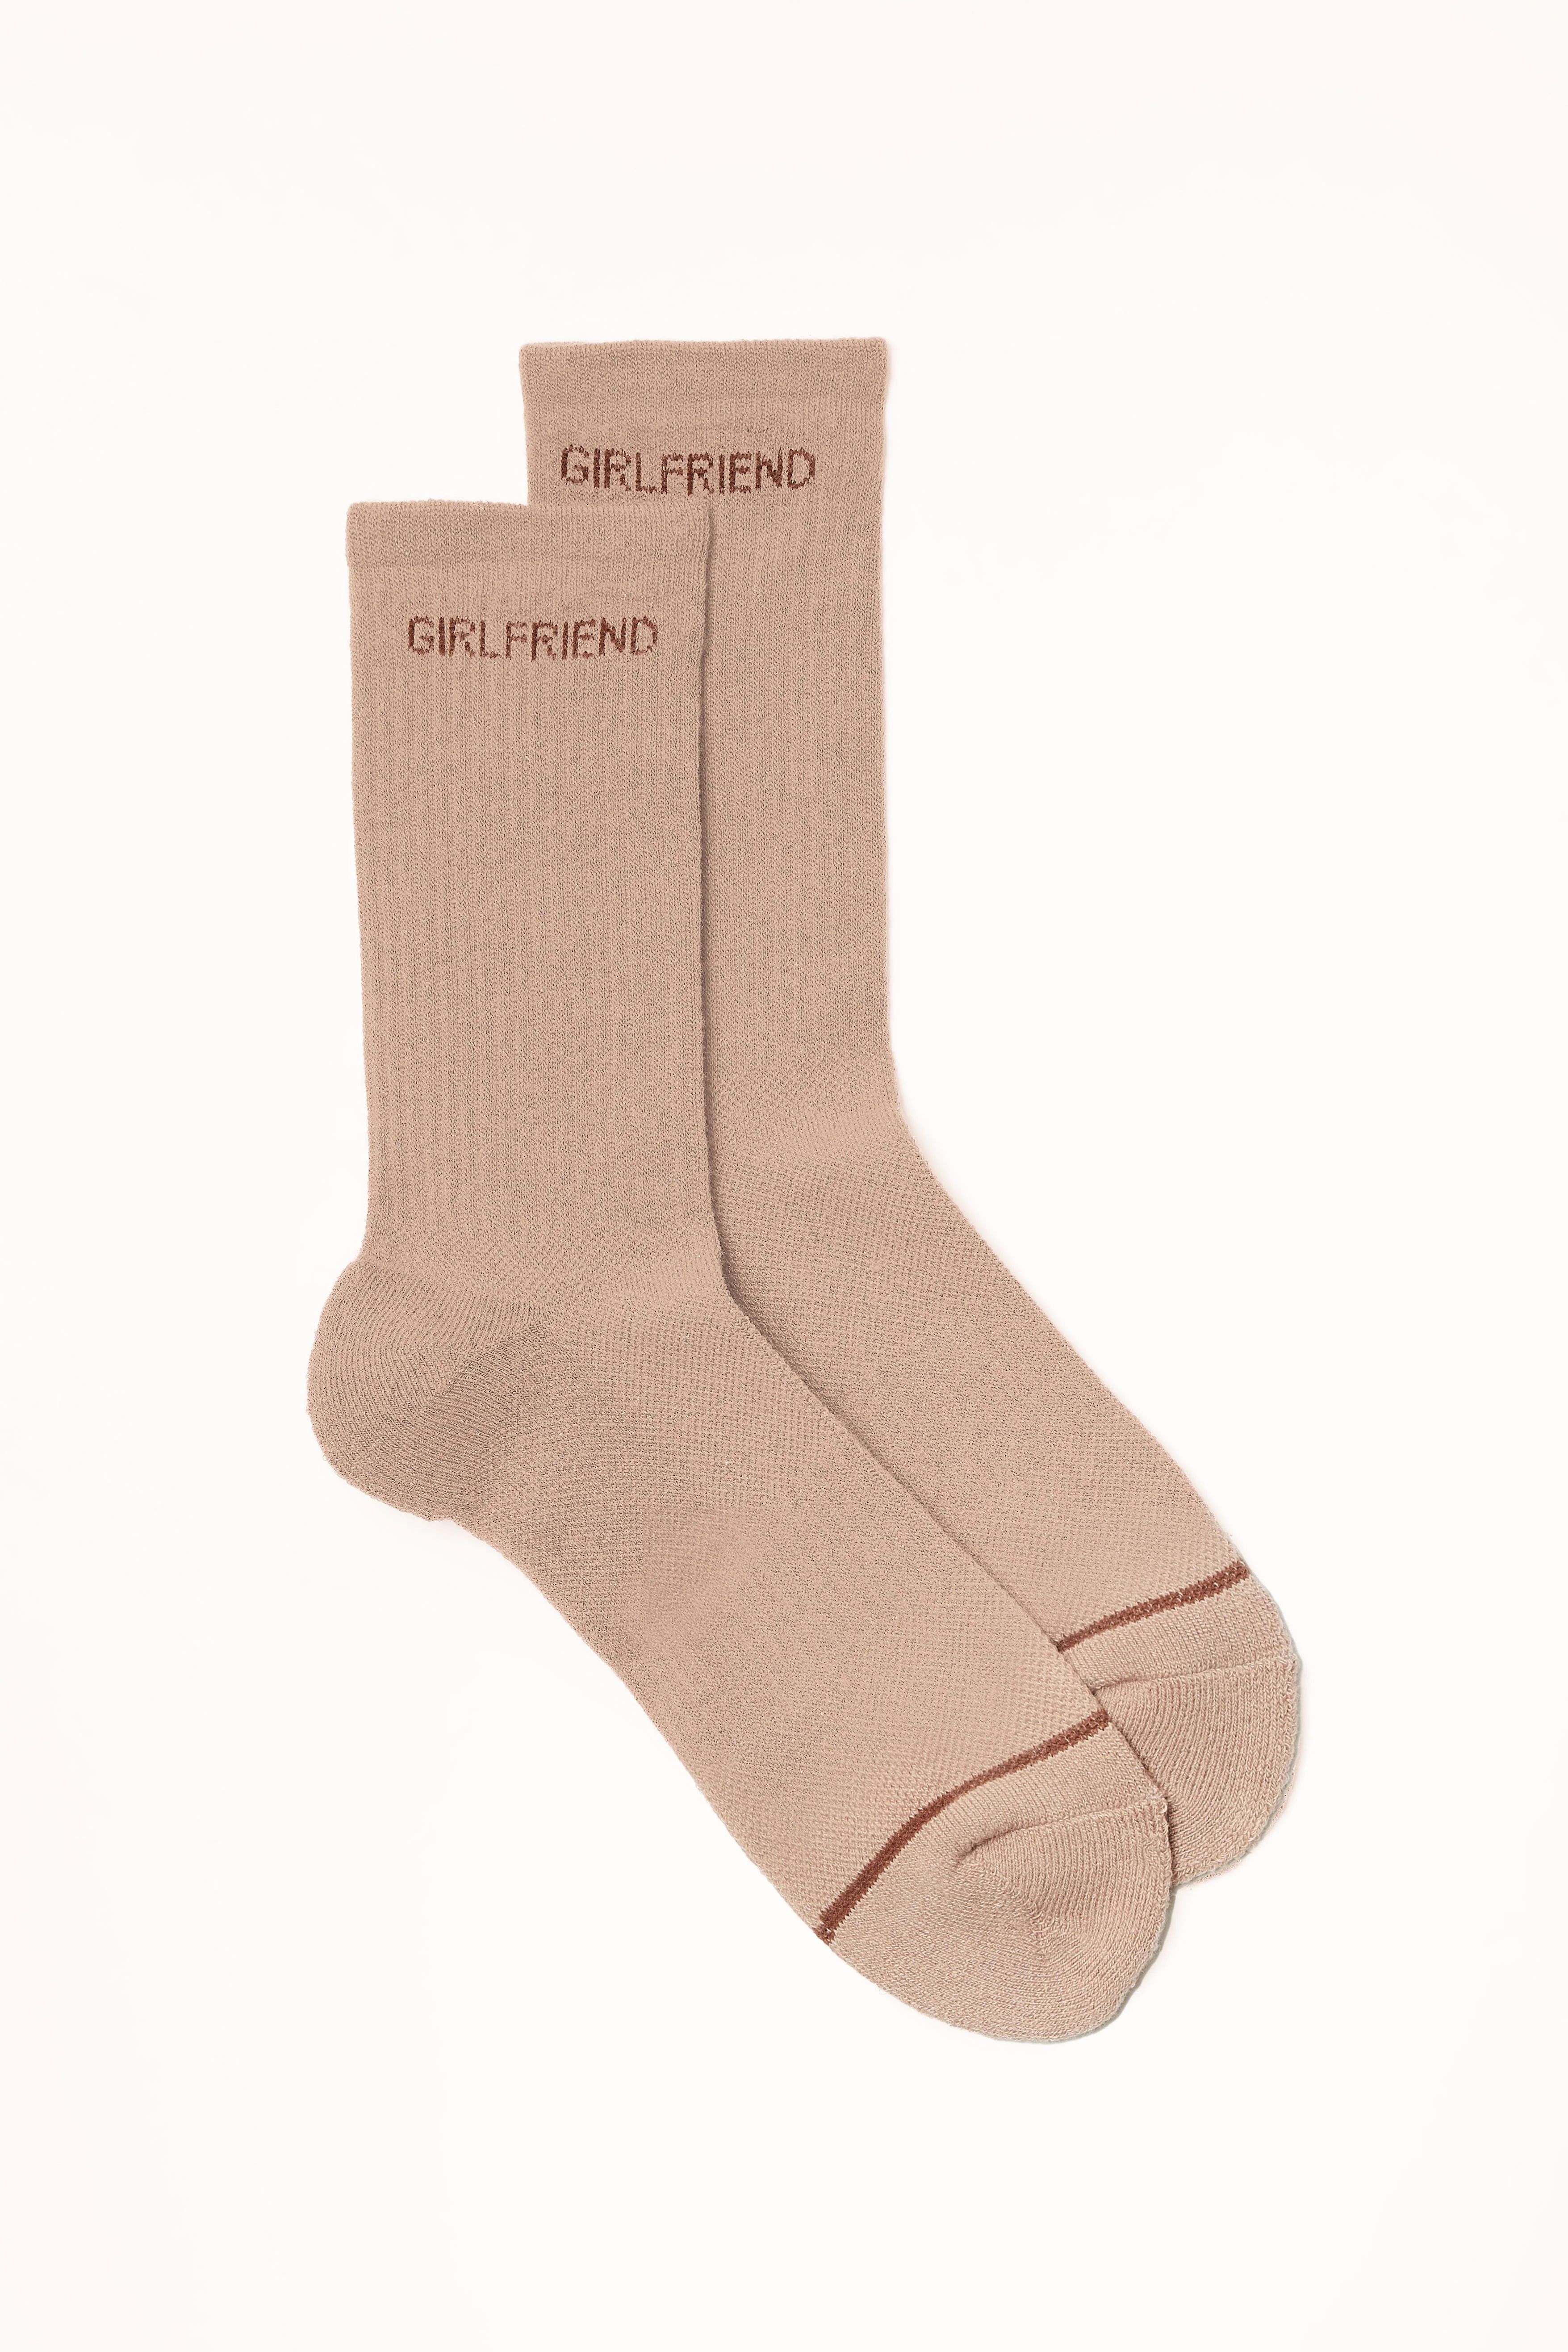 Blush Girlfriend Crew Sock | Girlfriend Collective